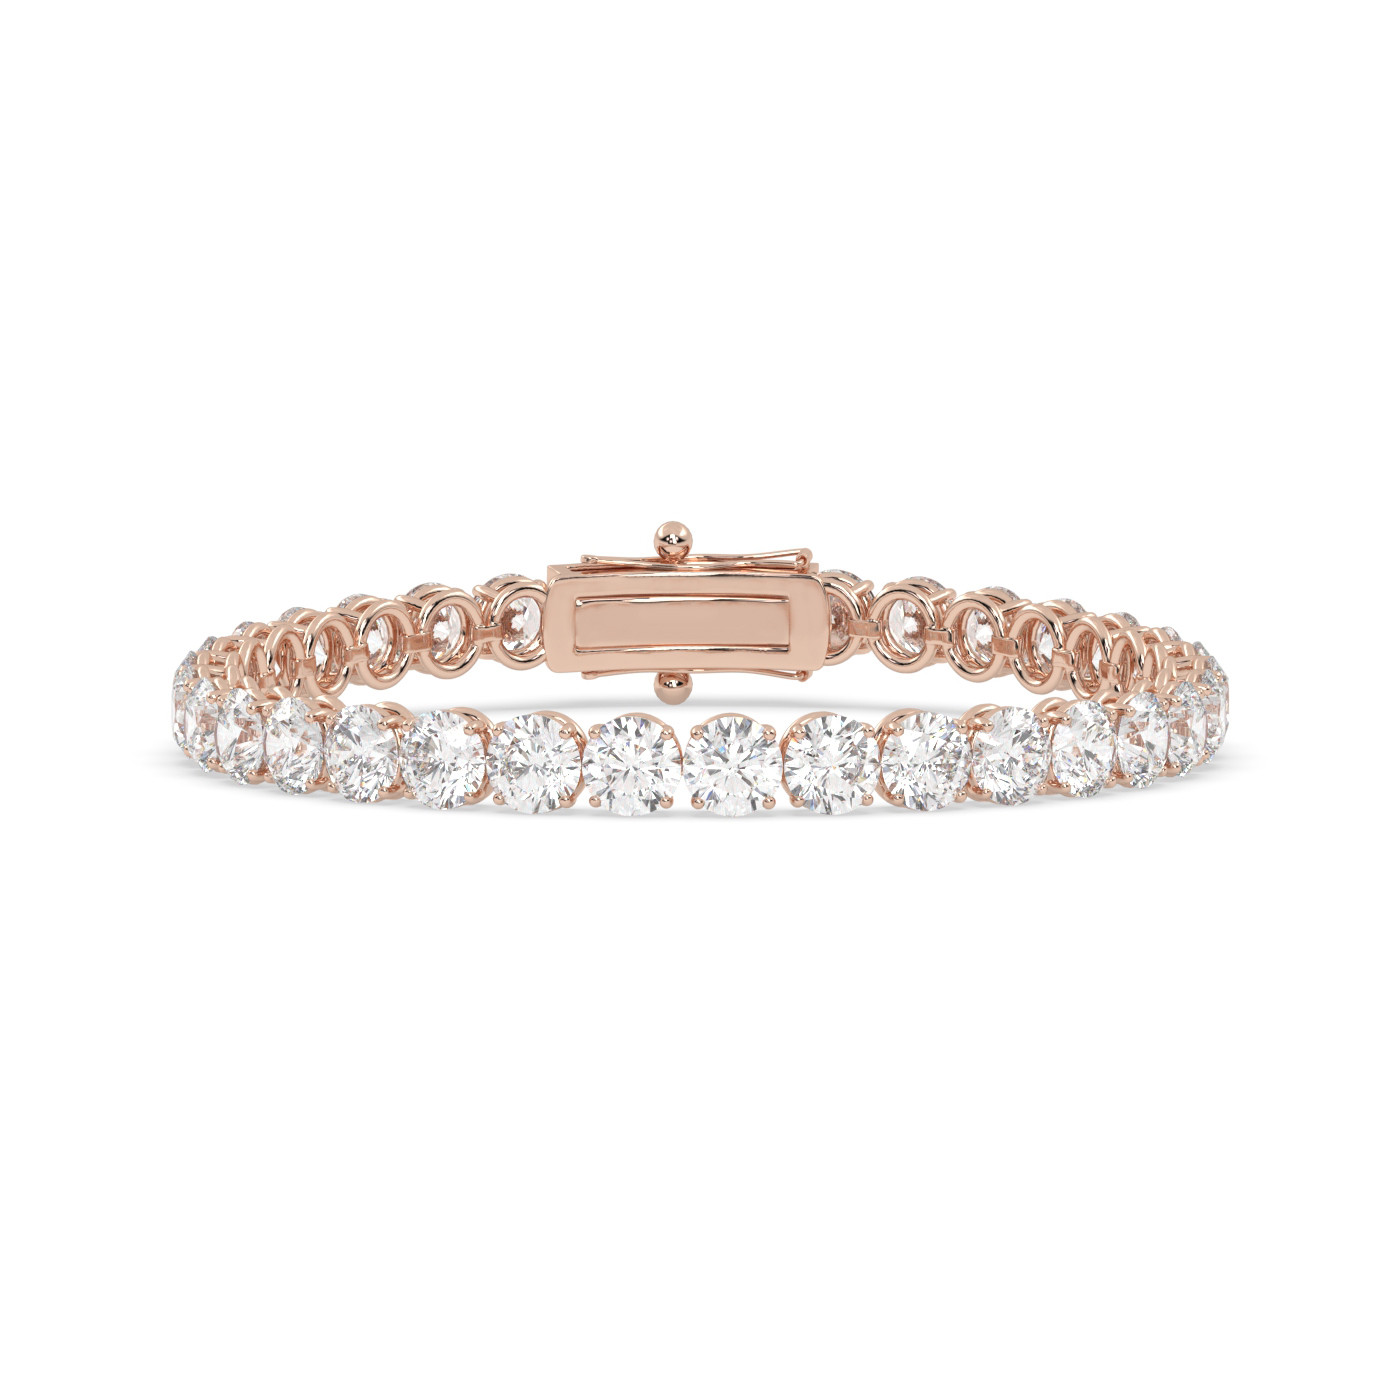 18k rose gold  3.0 carat round diamond tennis bracelet with traditional lock sytem Photos & images